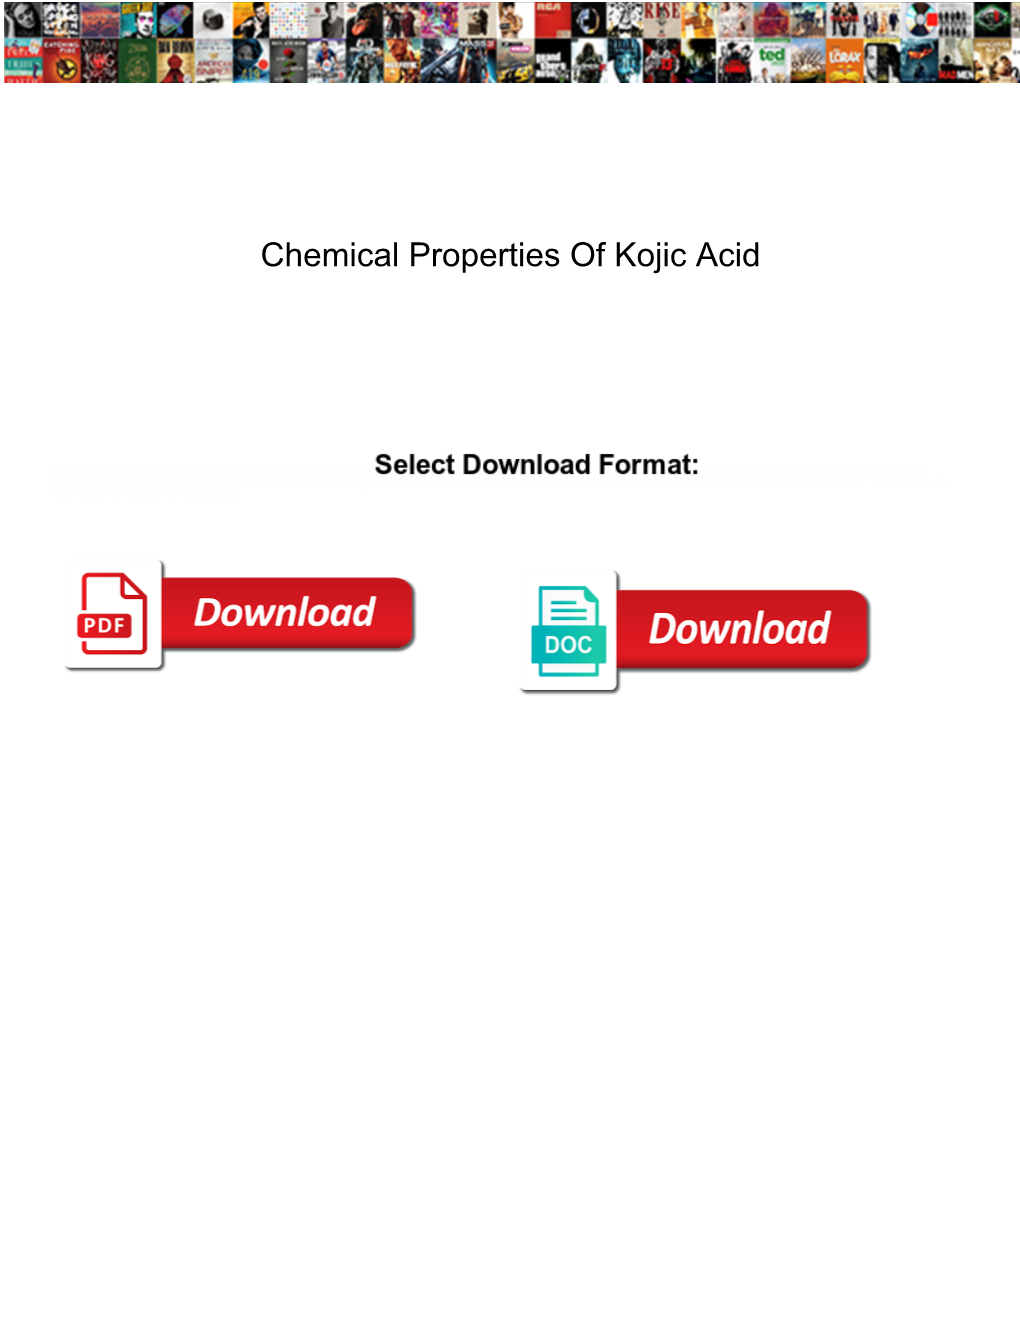 Chemical Properties of Kojic Acid